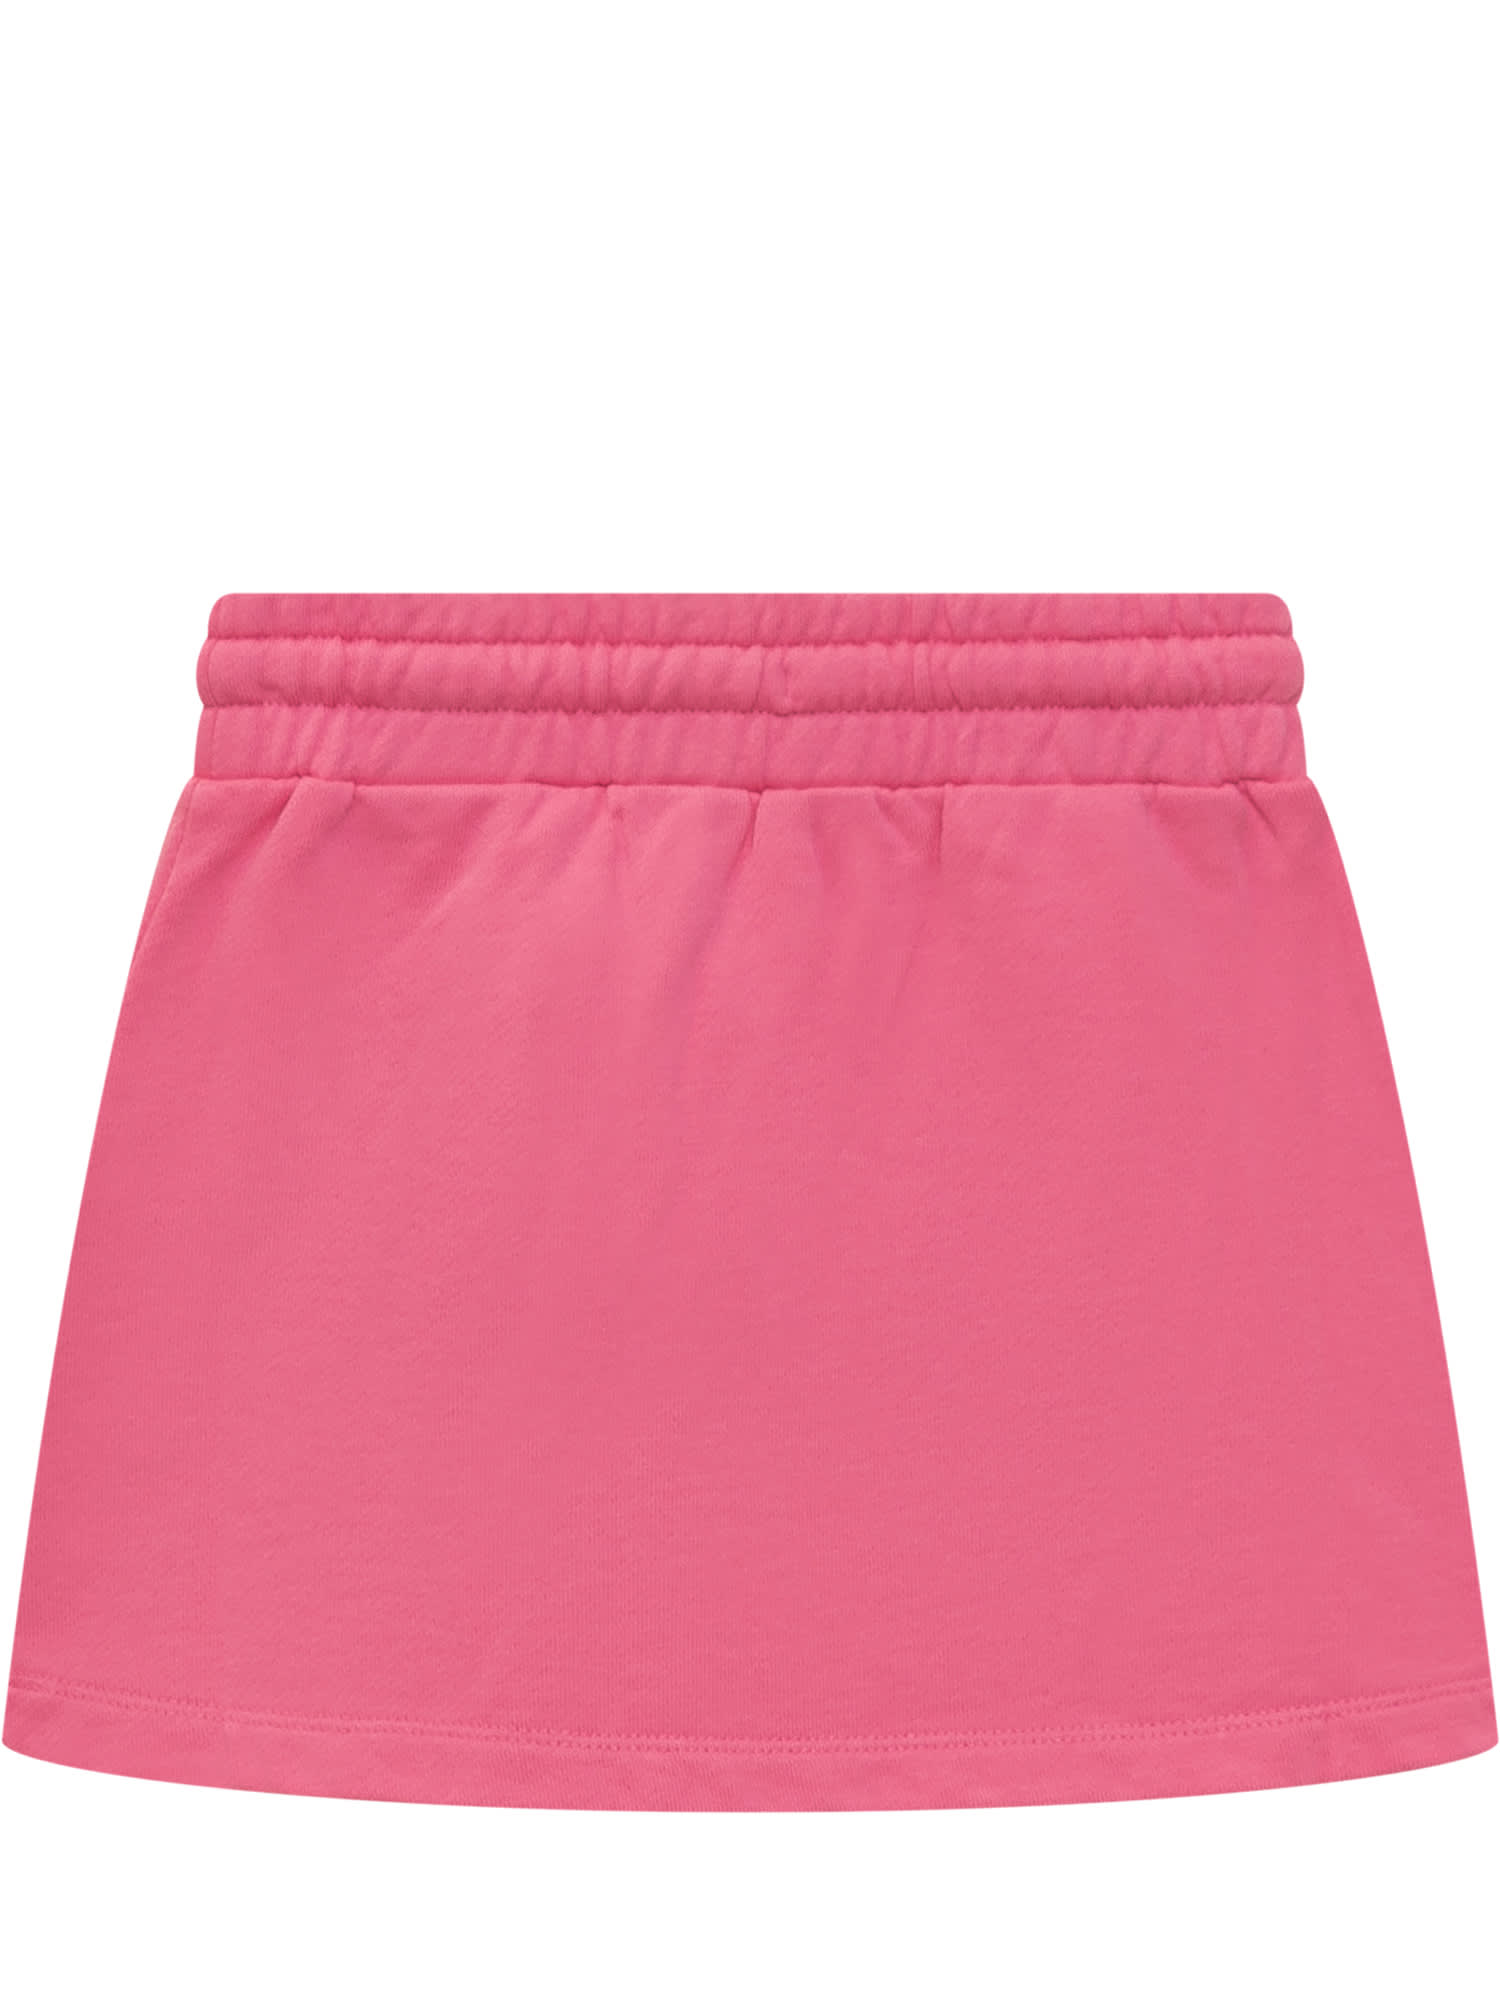 Off-White Kids logo-print cotton skirt - Pink